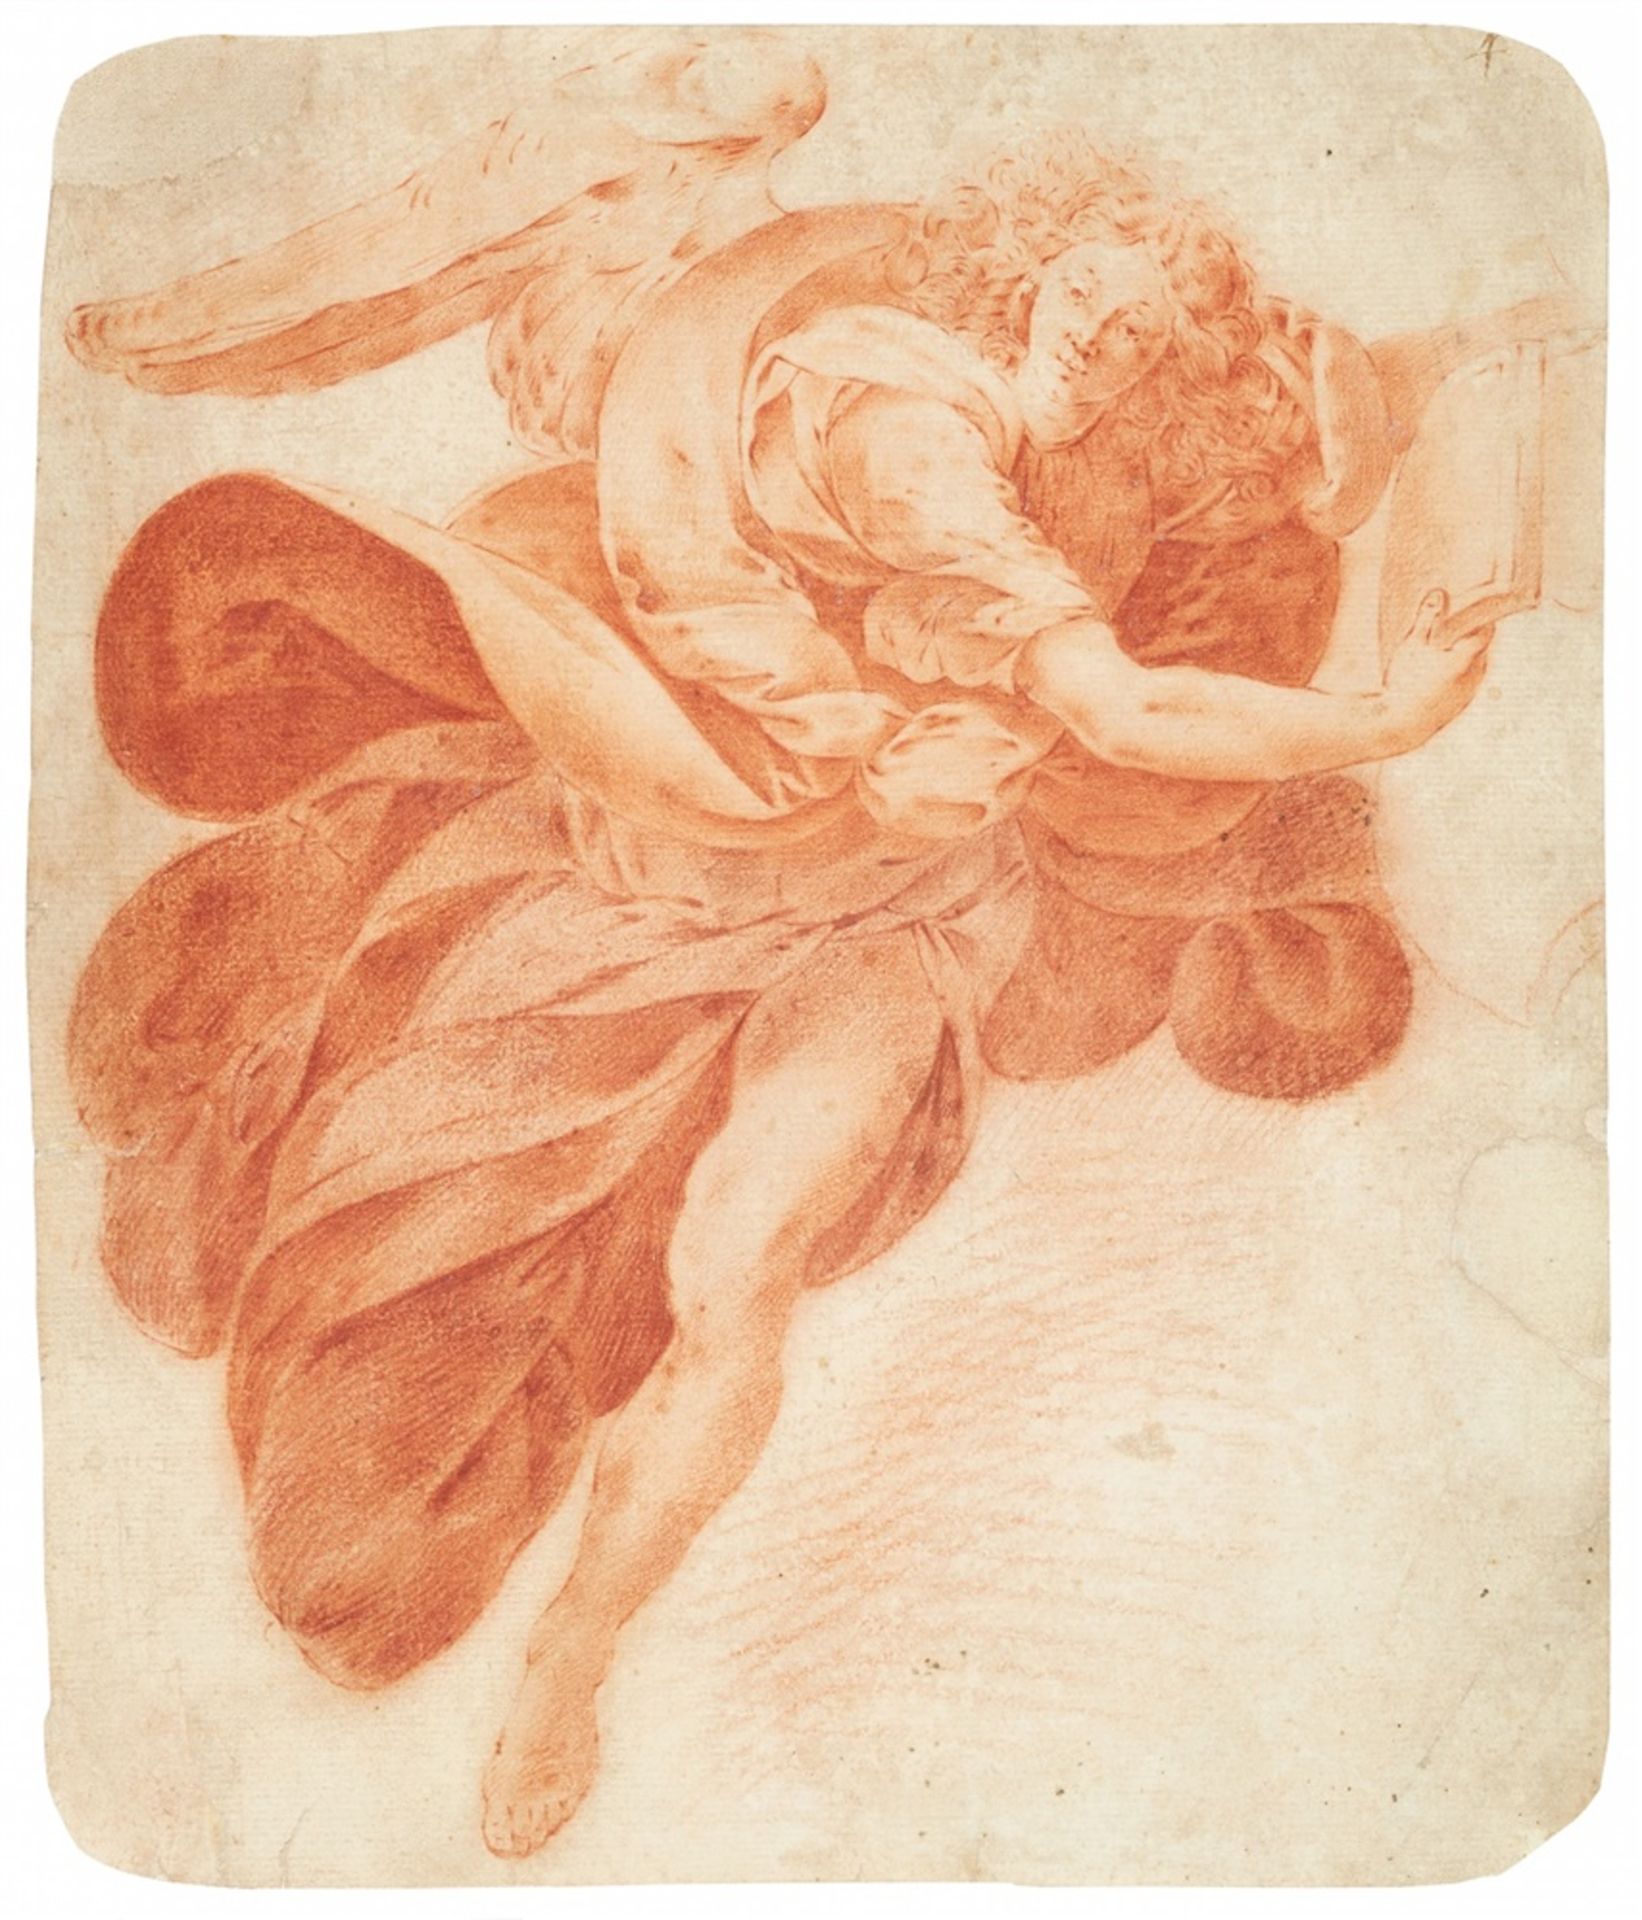 Camillo ProcacciniAn Archangel in FlightRed chalk on textured paper.. 29.2 x 24.5 cm.